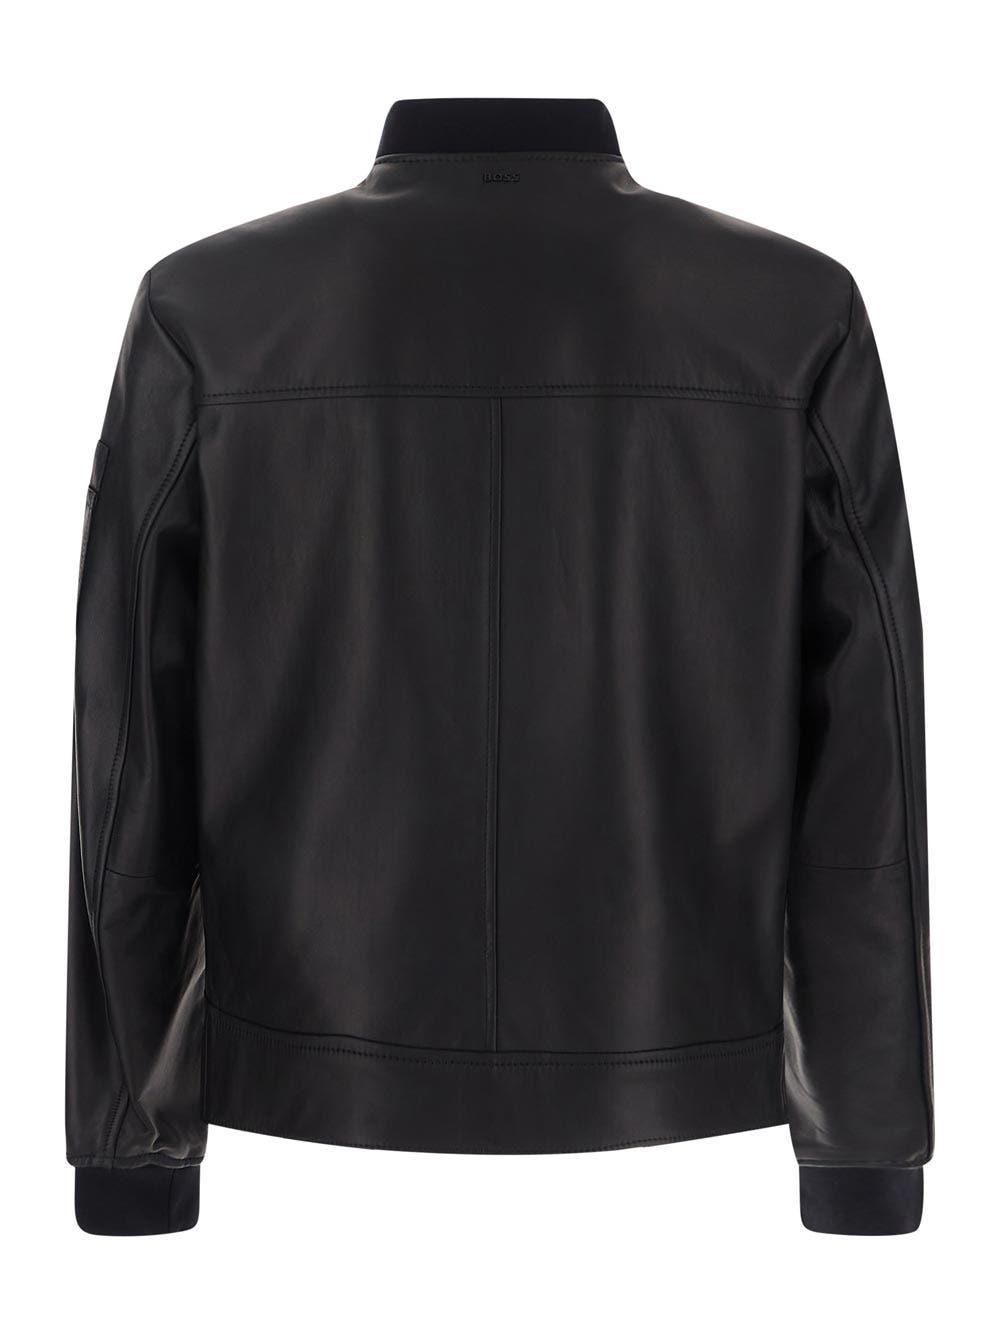 BOSS by HUGO BOSS Leather Jacket for Men | Lyst